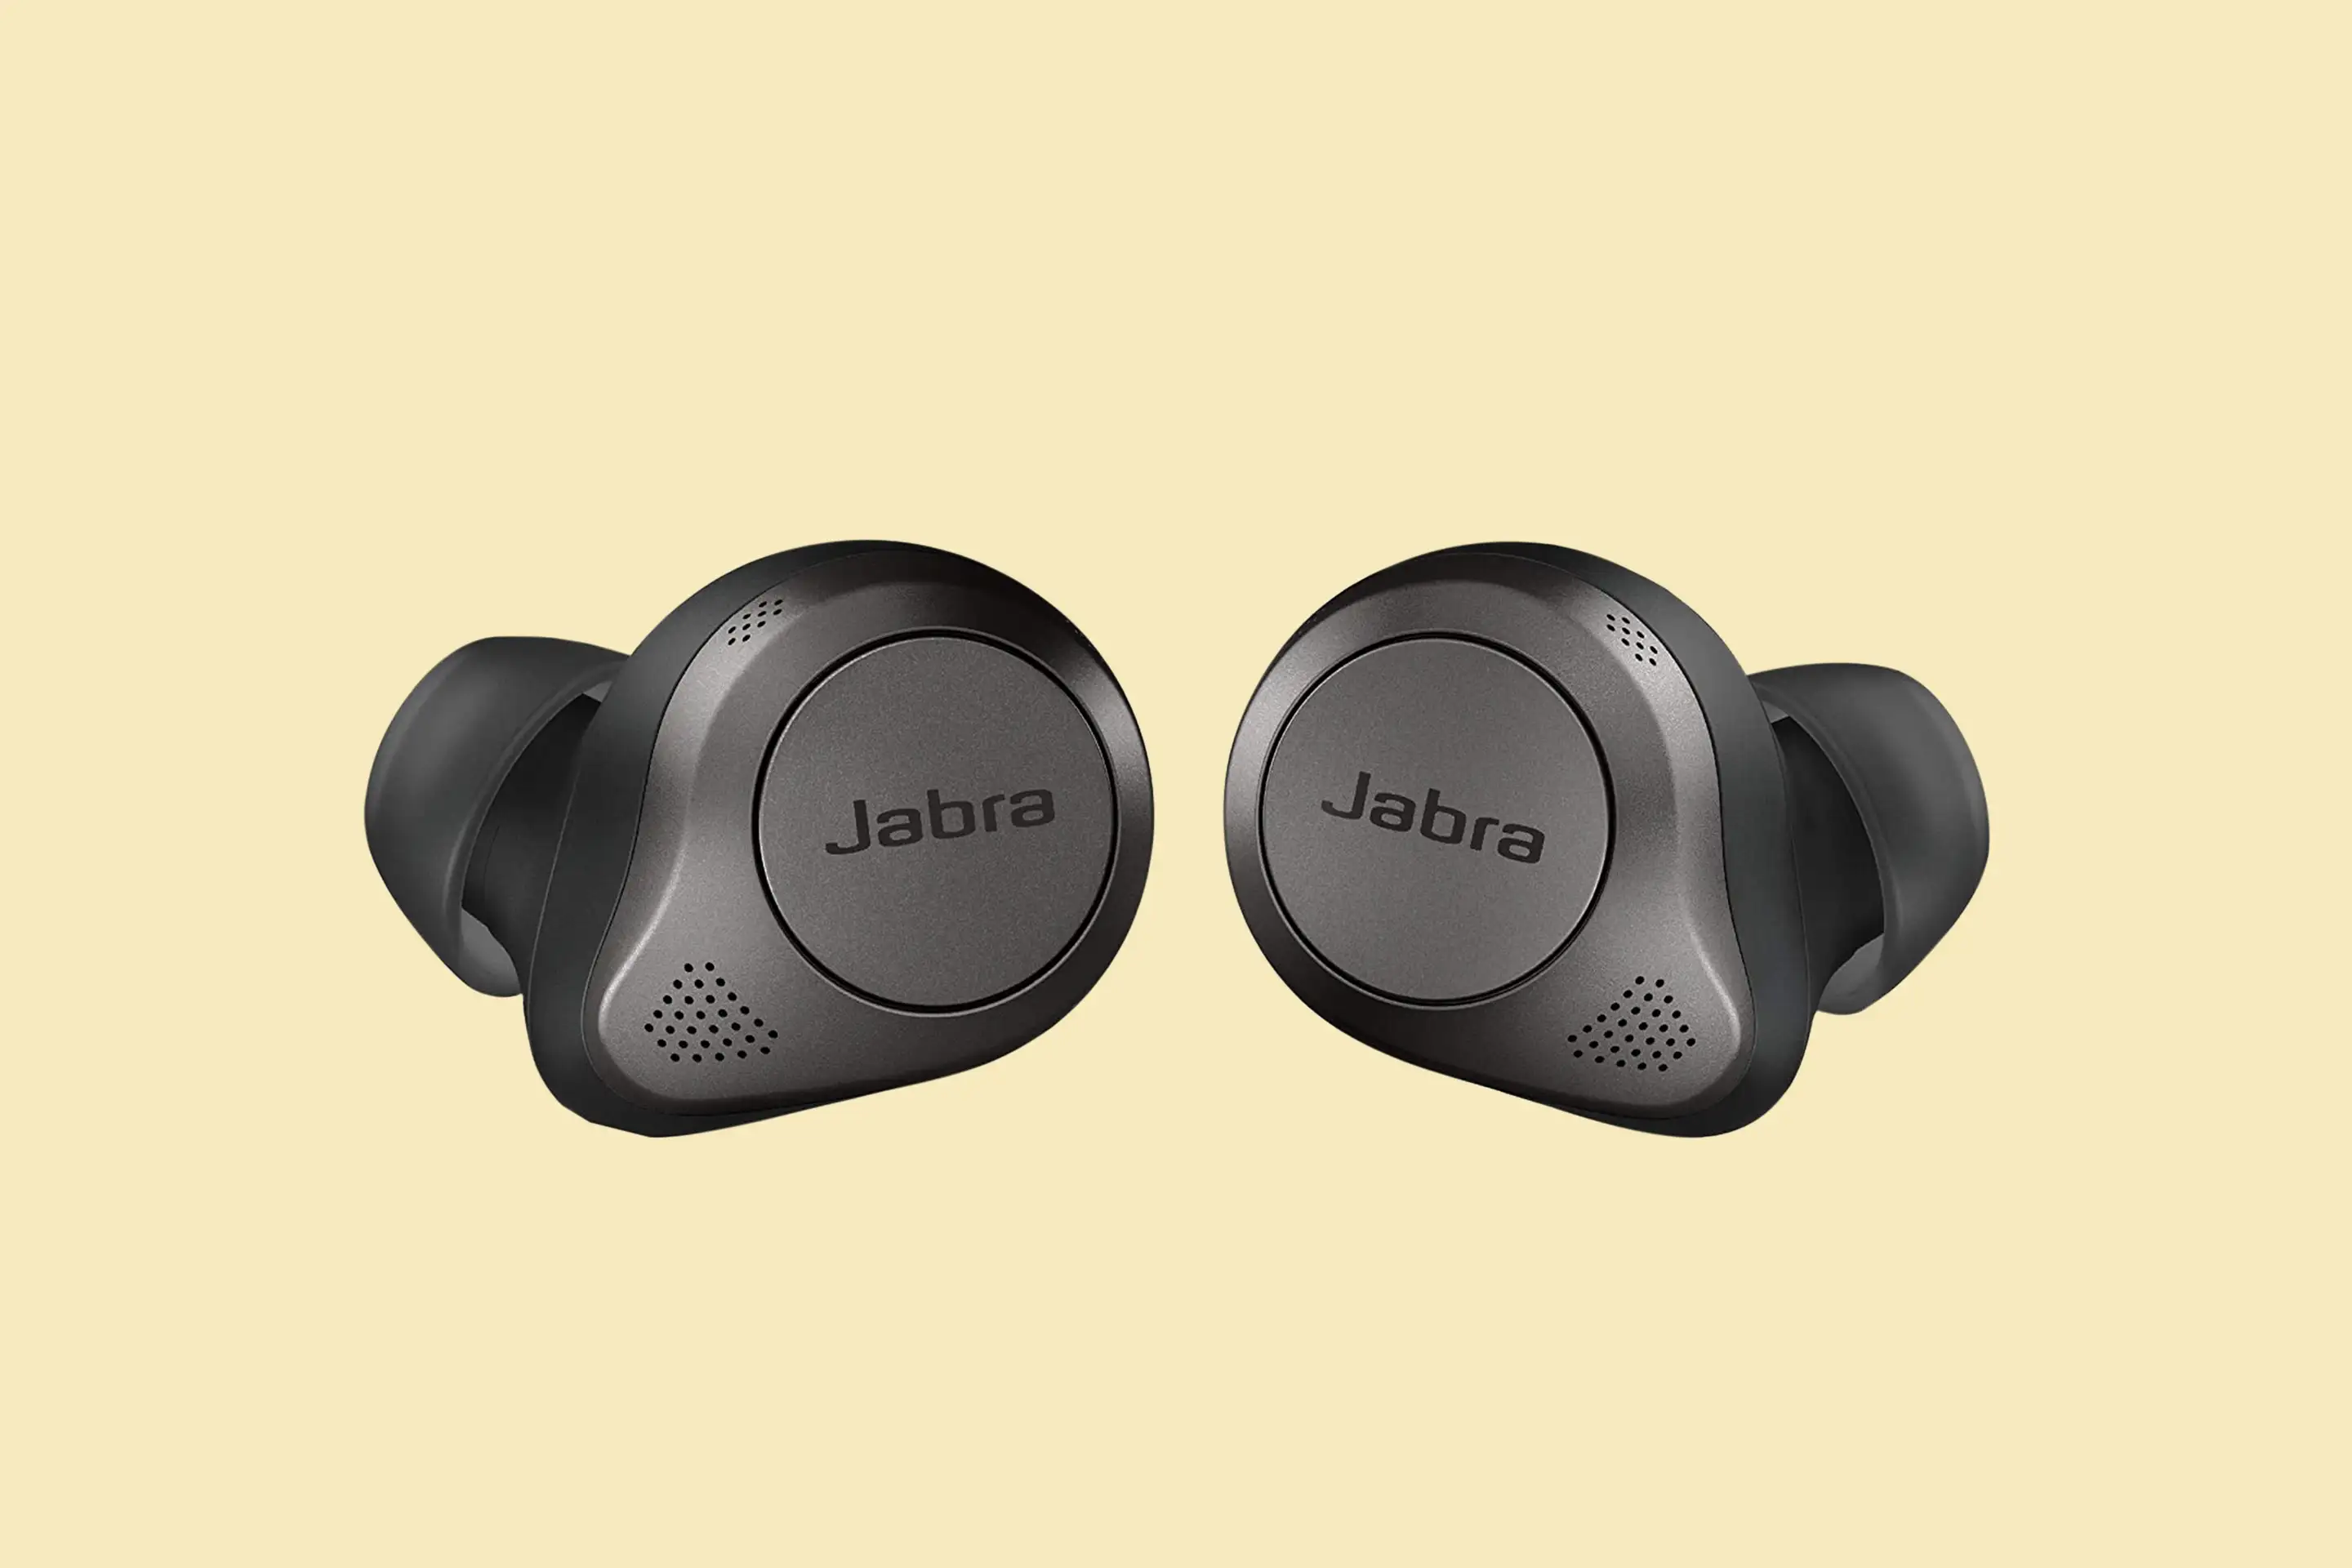 Jabra Elite 75t wireless headphones